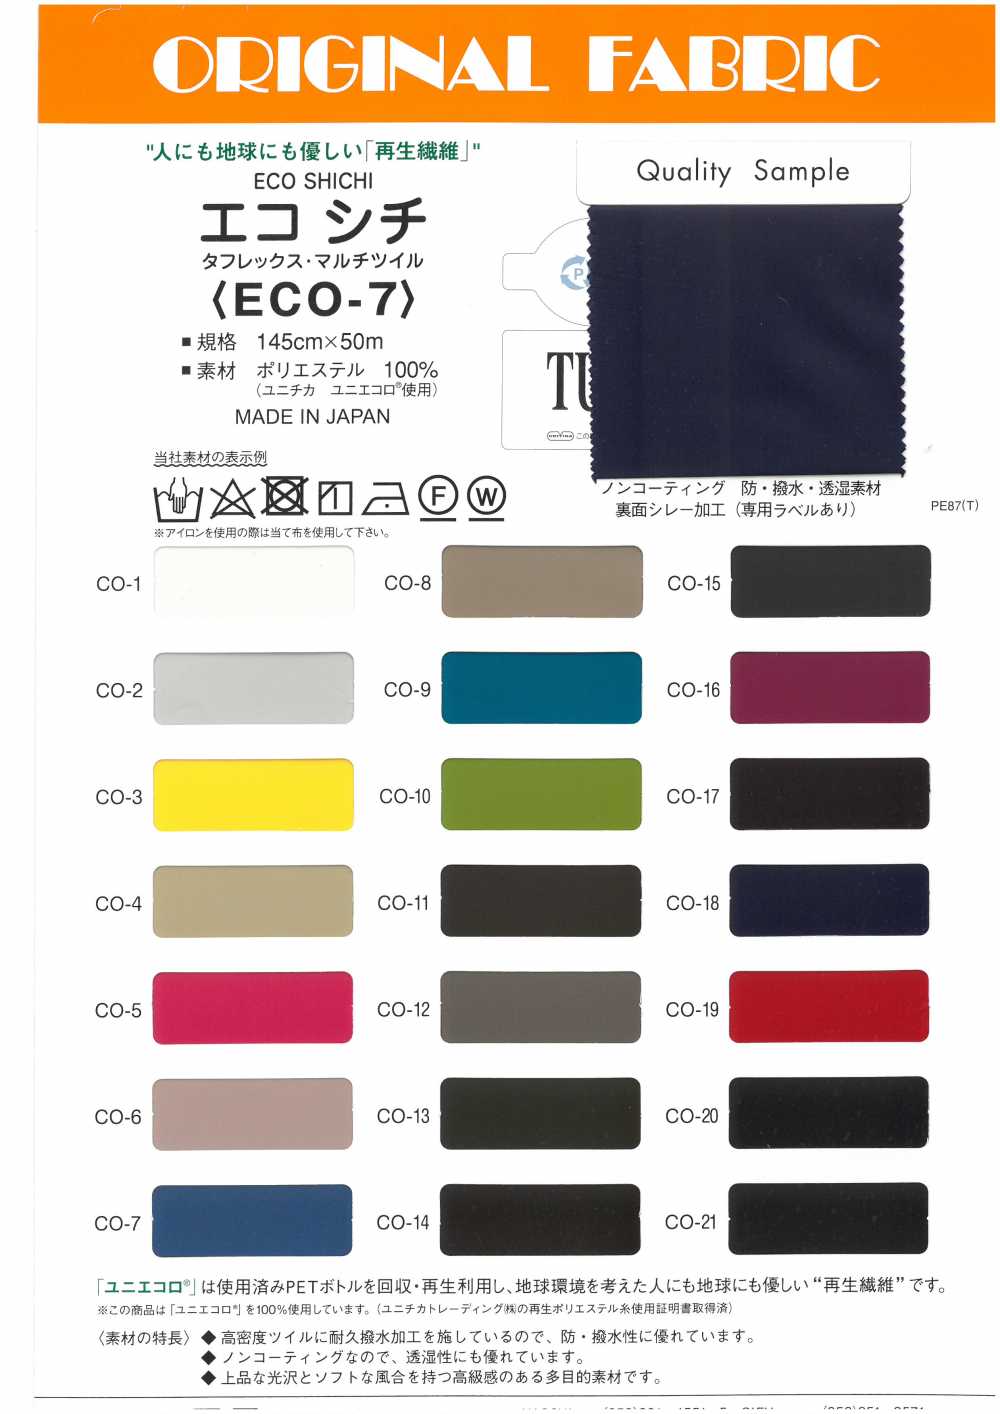 ECO-7 Eco-Citi &lt;Taflex Multi-Twill&gt;[Fabrication De Textile] Masuda